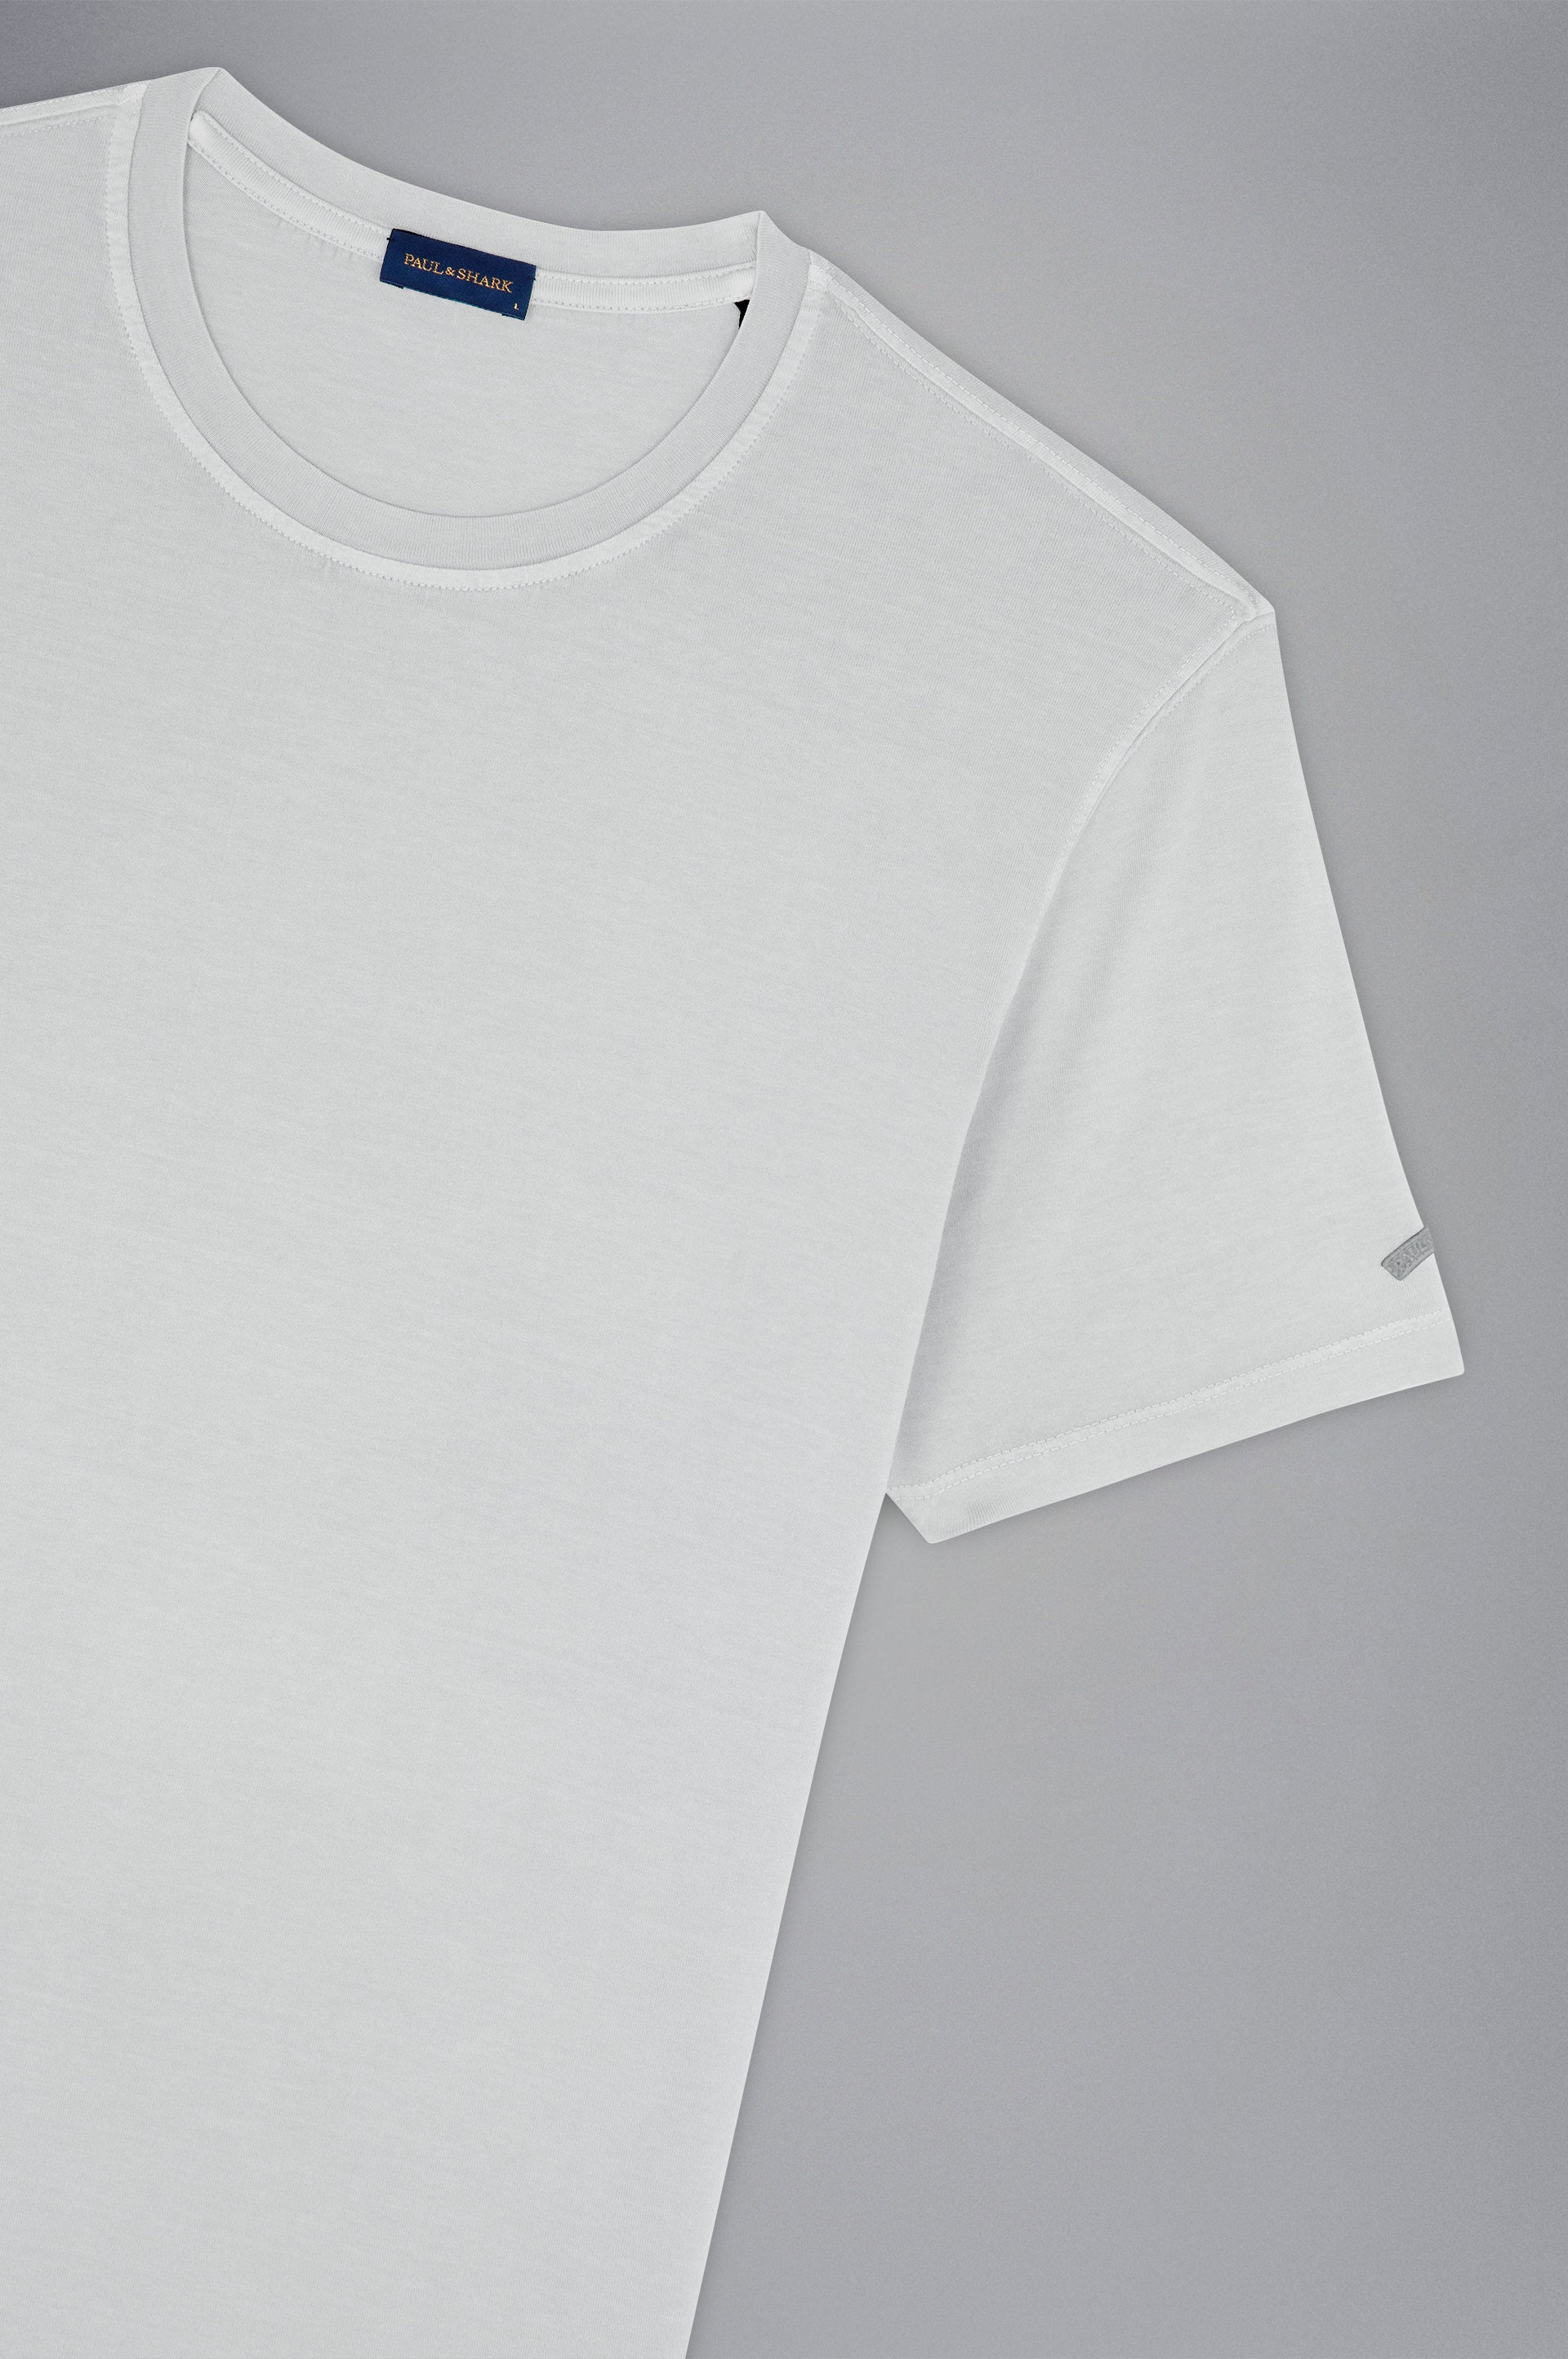 paul&shark-24411002-010-t-shirt-jersey-bianco-3